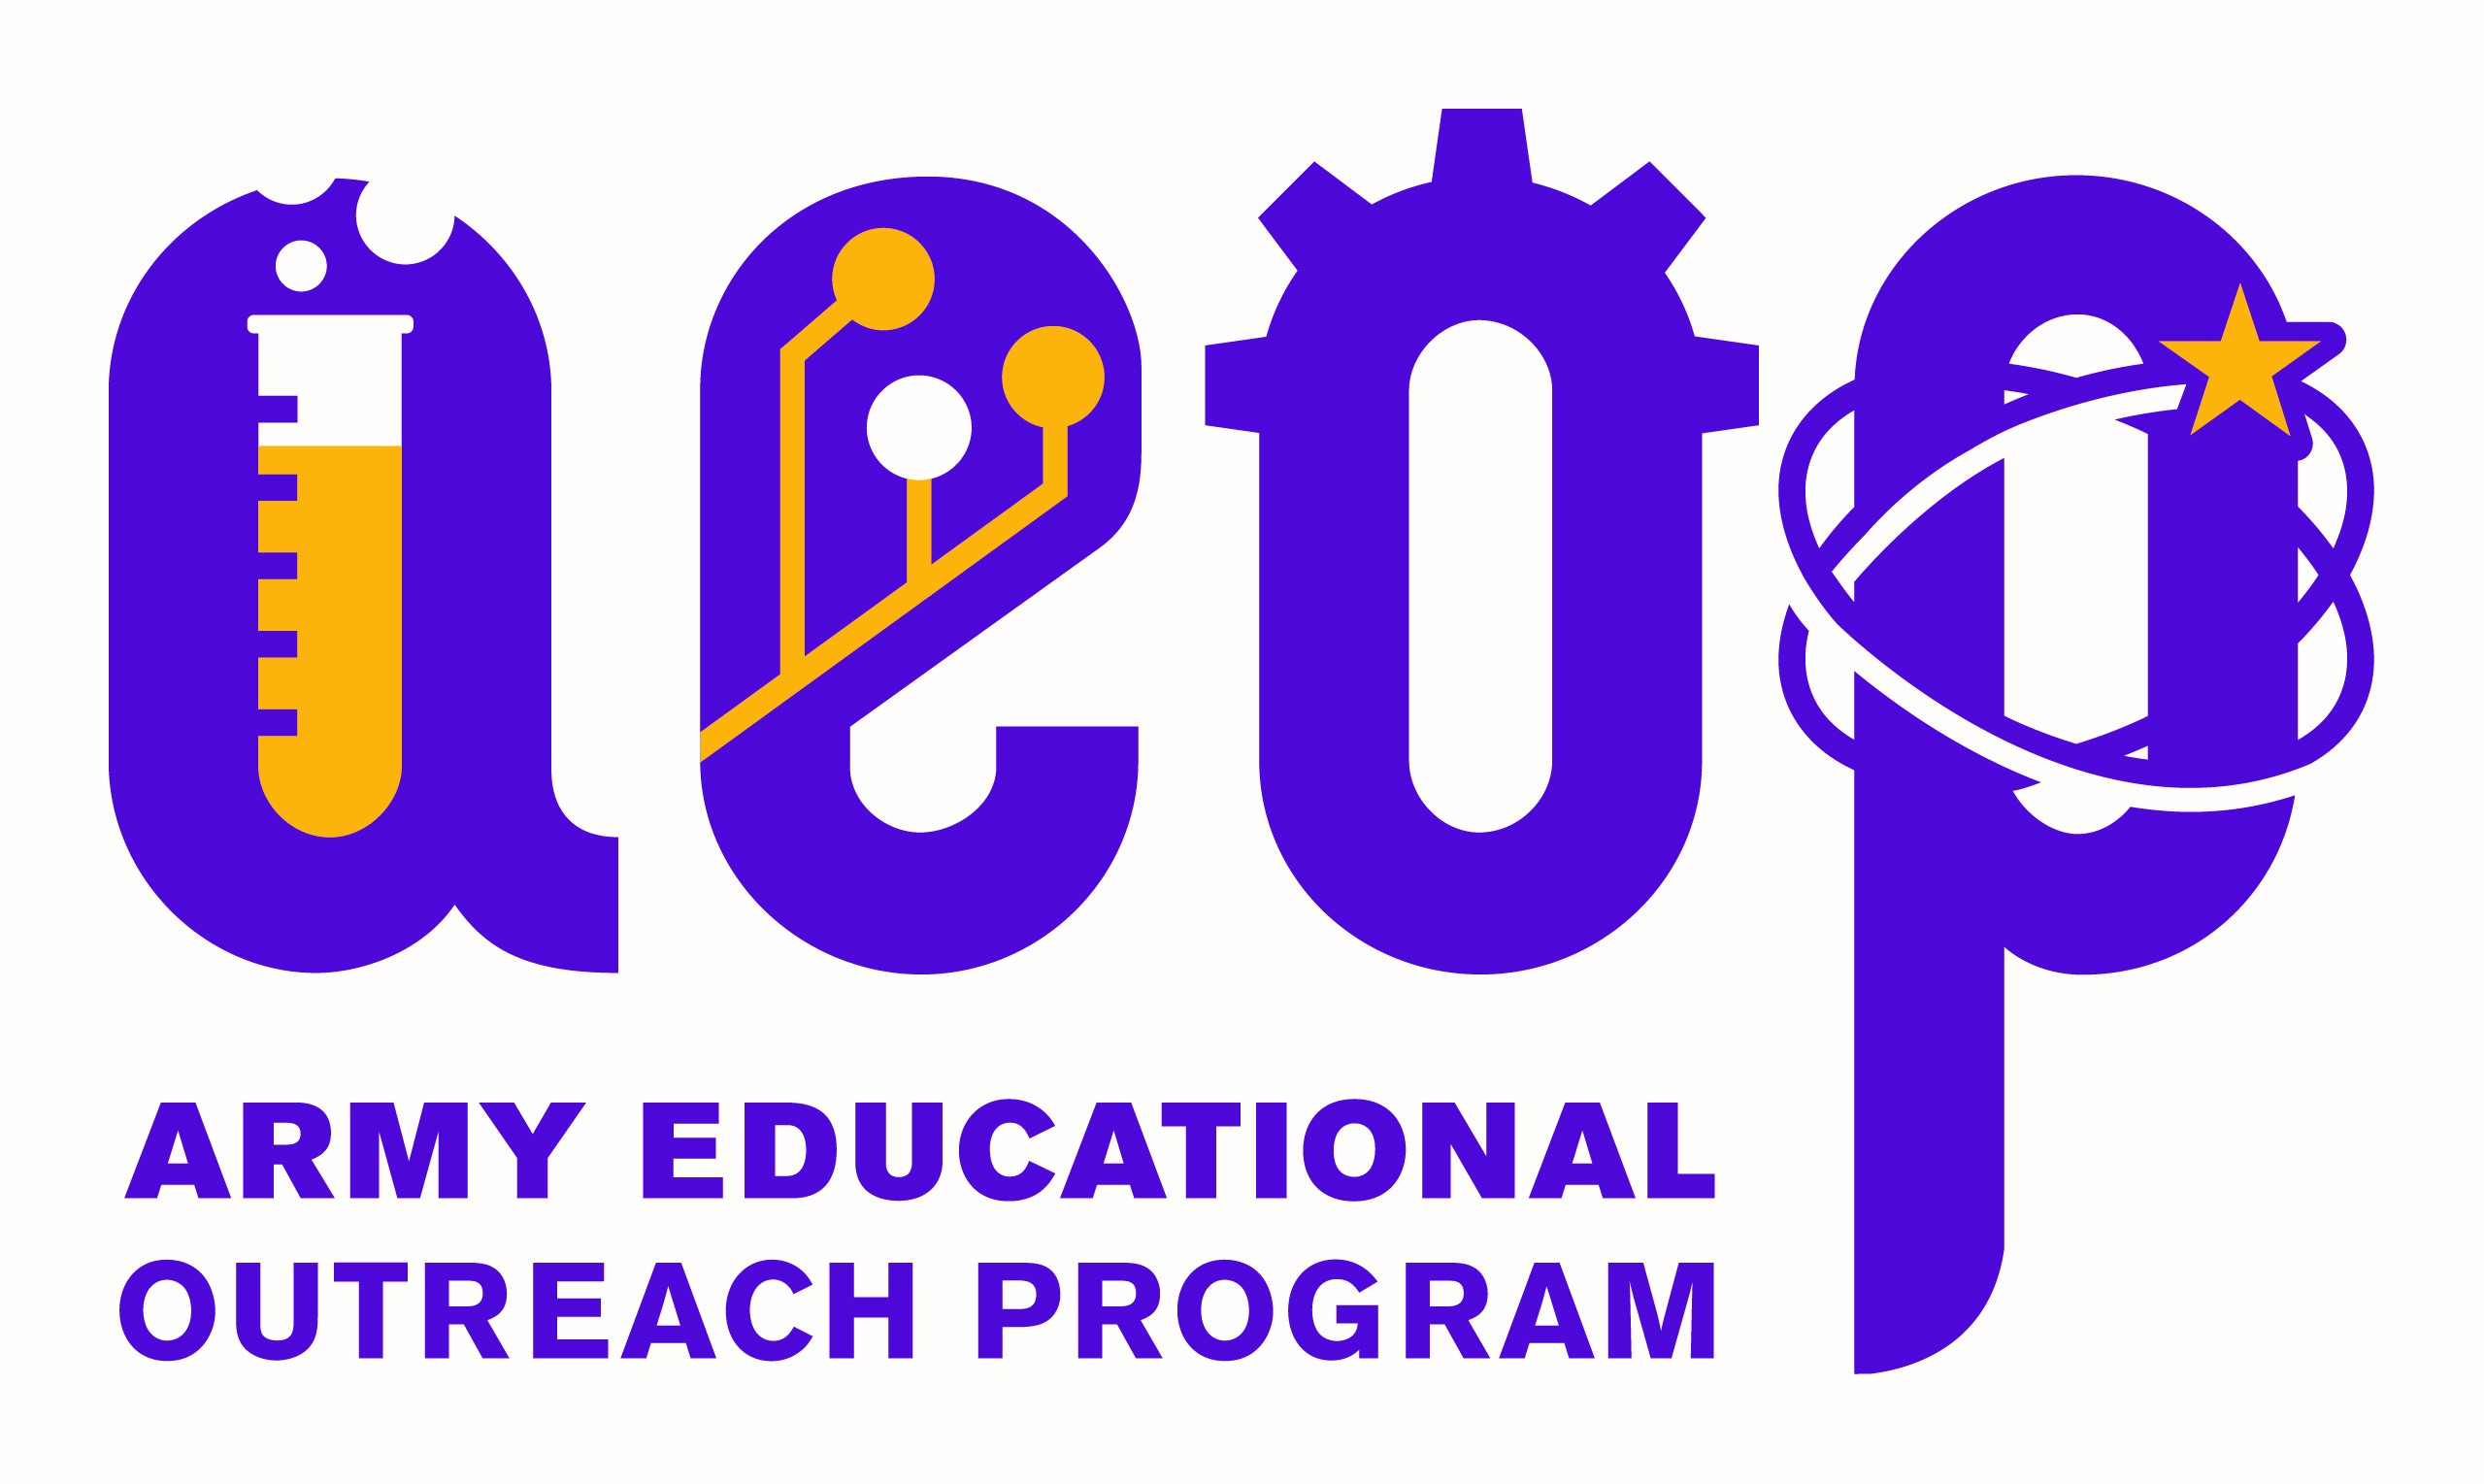 Army Educational Outrearch Program logo